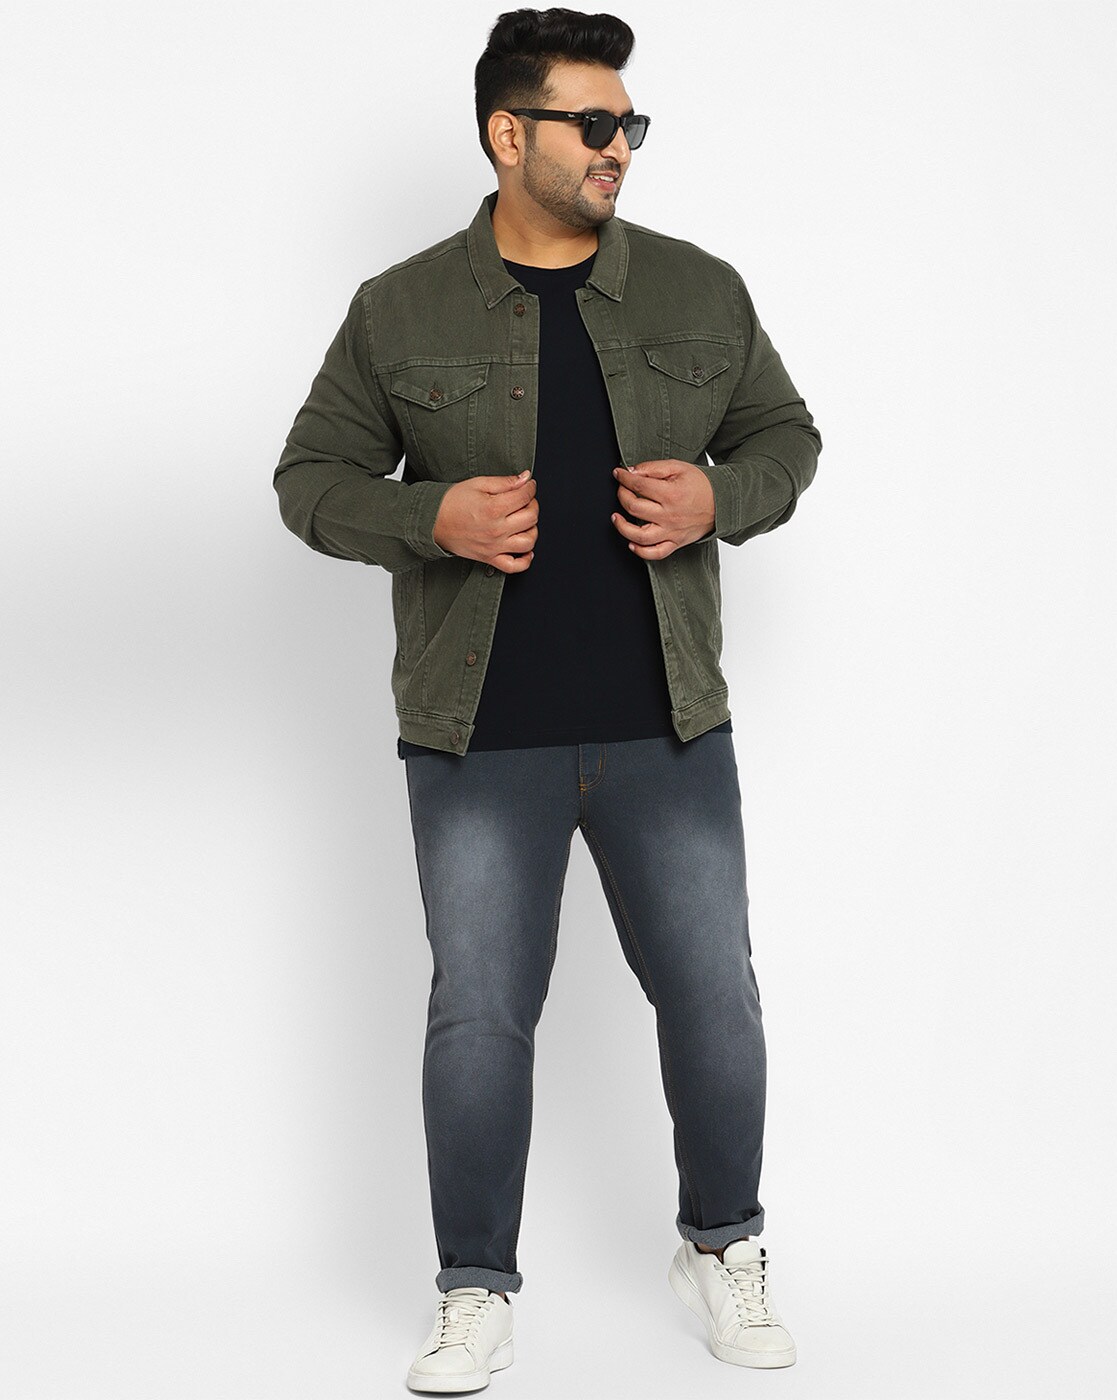 Buy FidgetGear Autumn Winter Men Denim Jacket Simple Solid Color Slim  Casual Cowboy Short Coat Army Green XL at Amazon.in